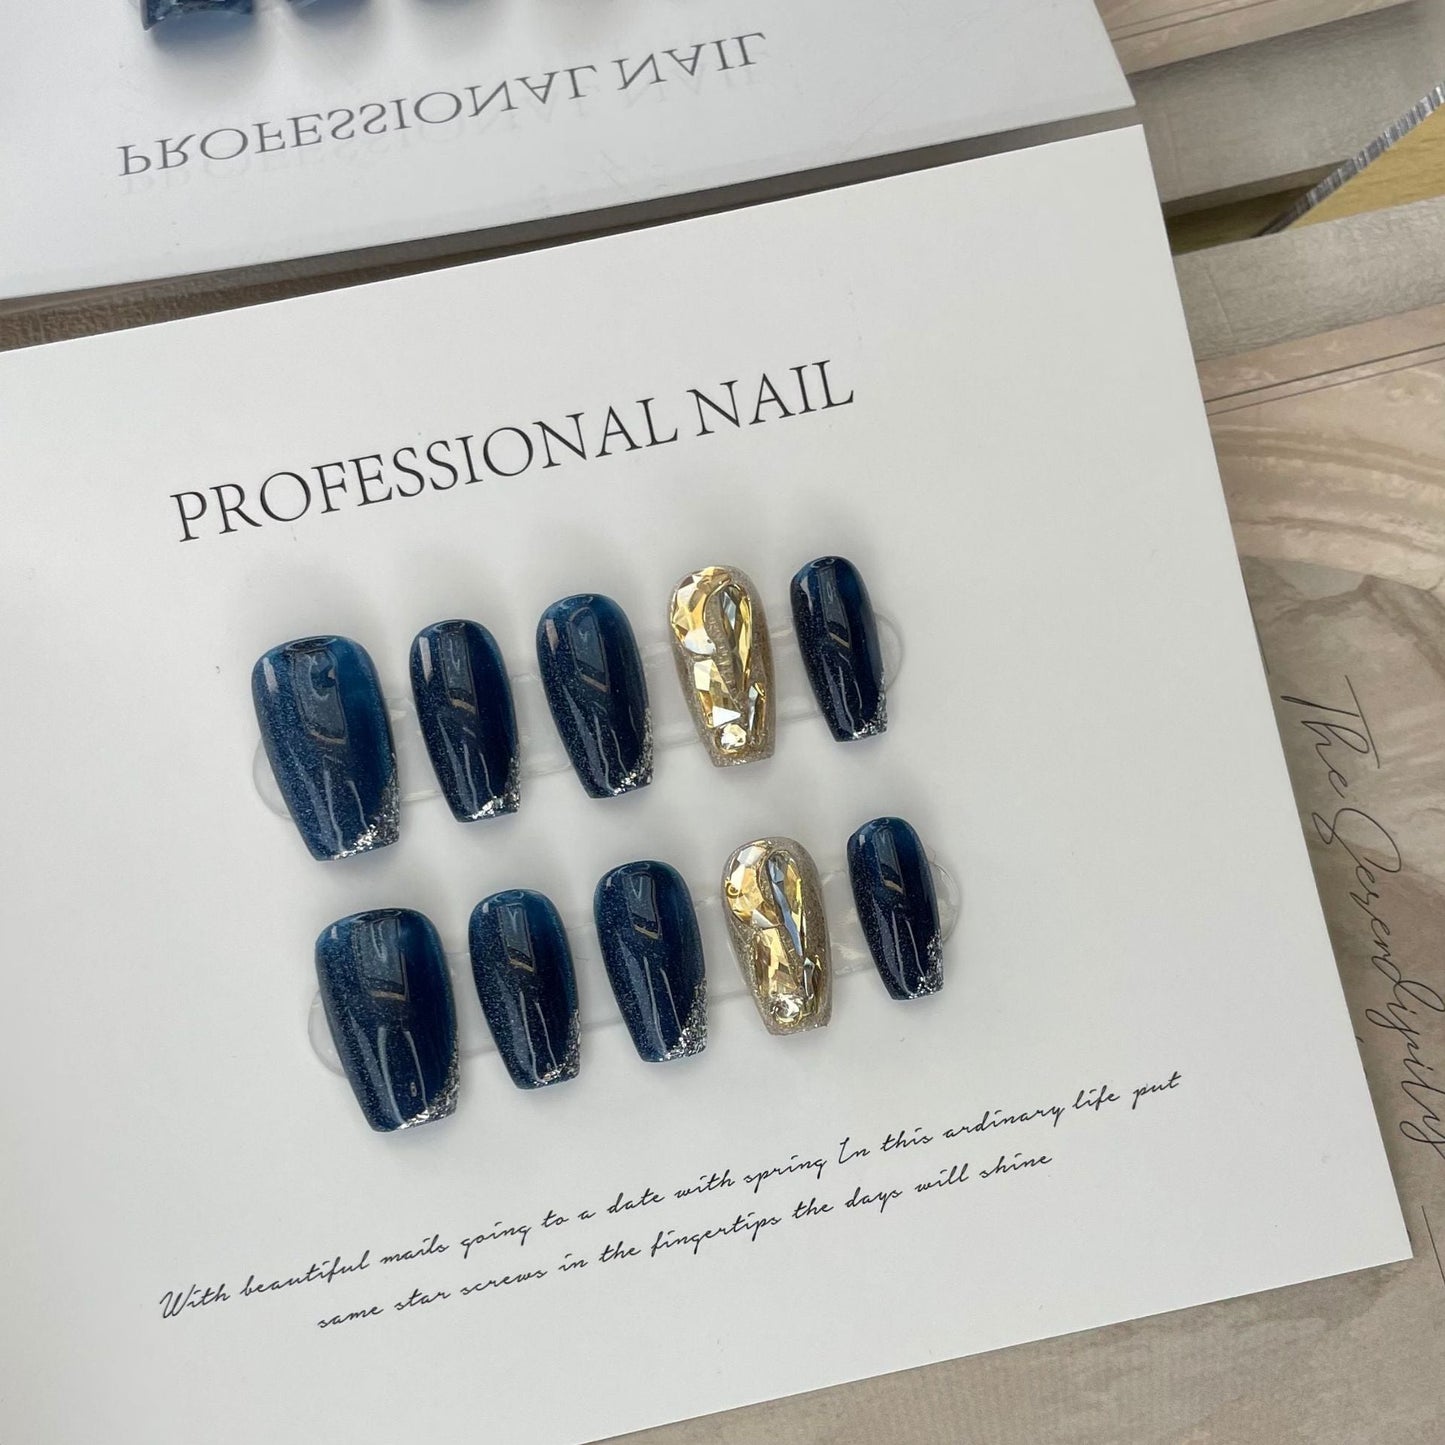 616 London Blue Cateye Effect press on nails 100% handmade false nails blue